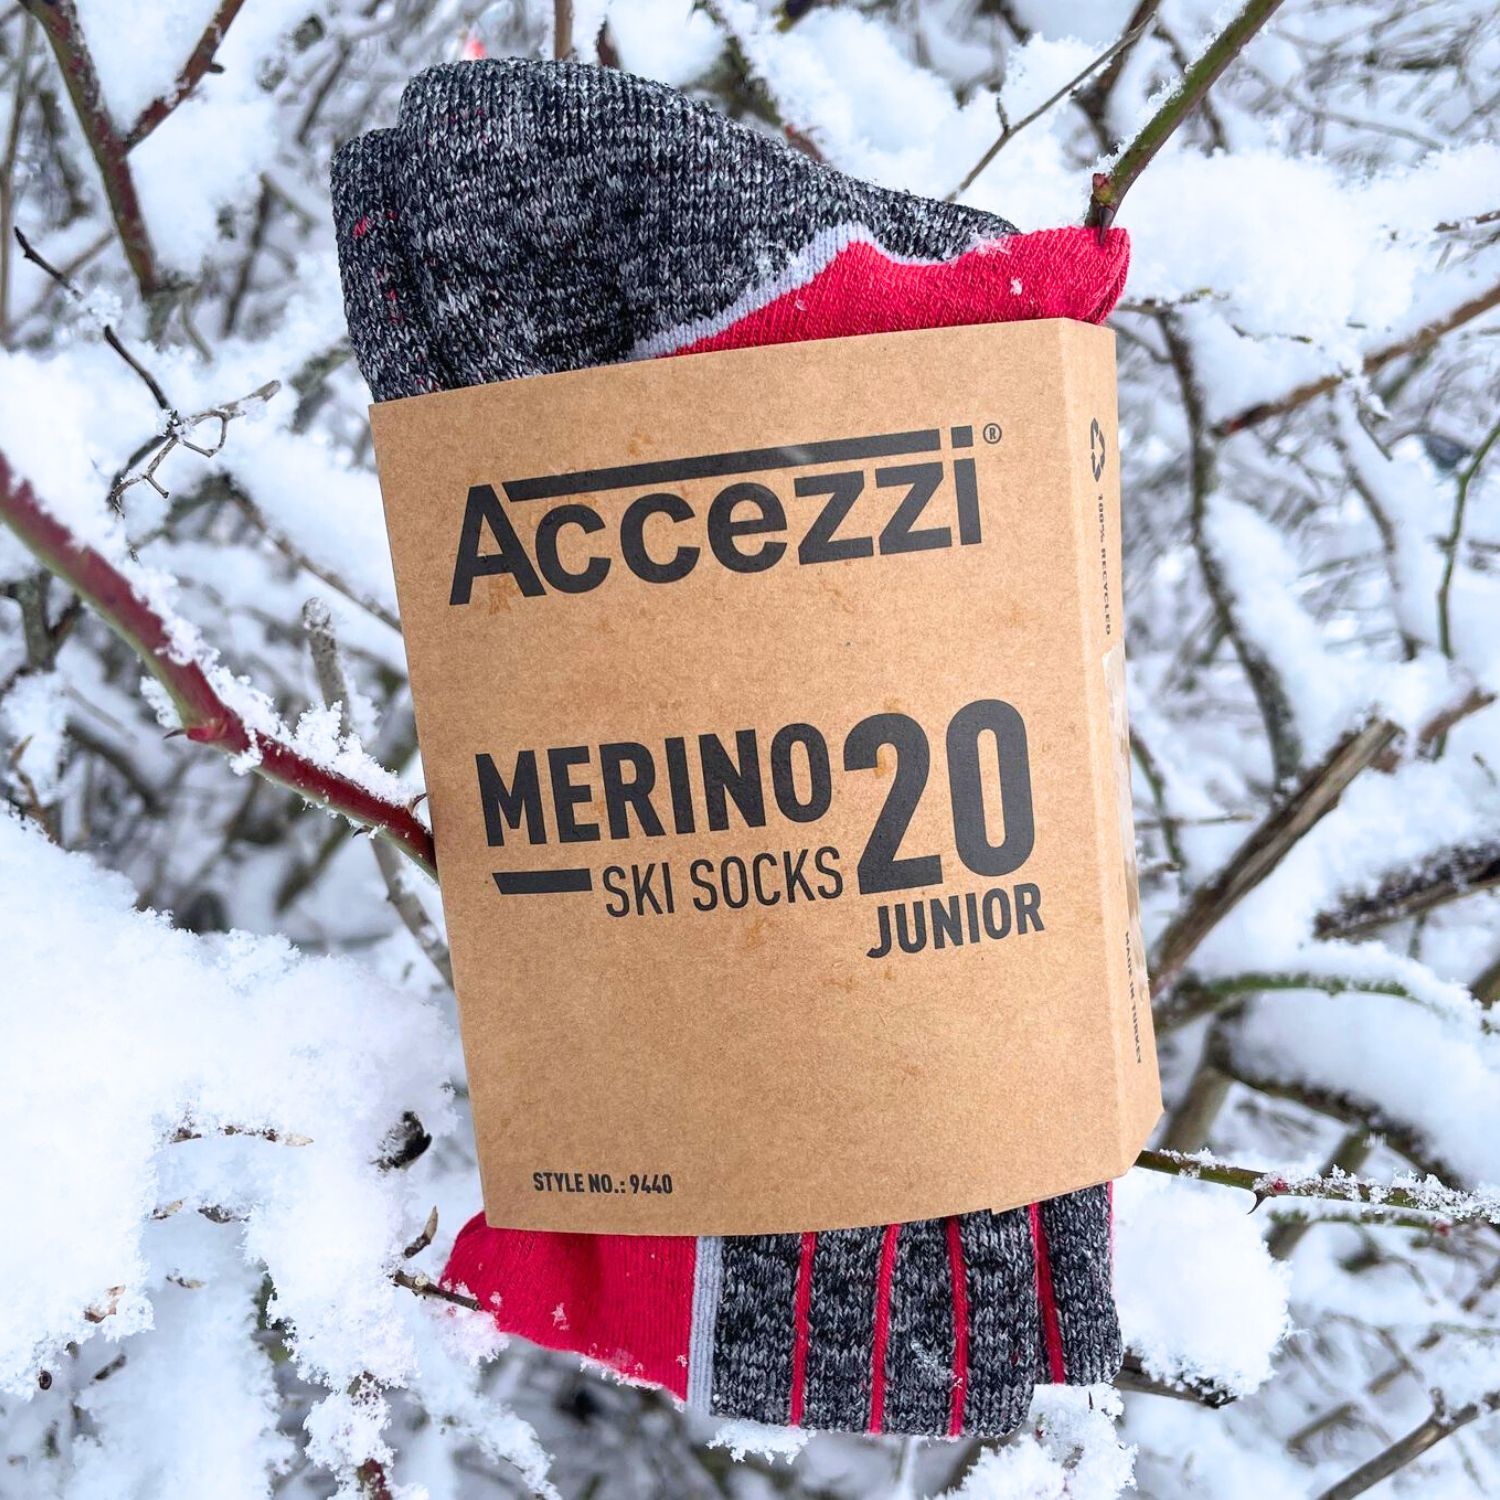 Accezzi Merino 20, skistrømper, junior, rød